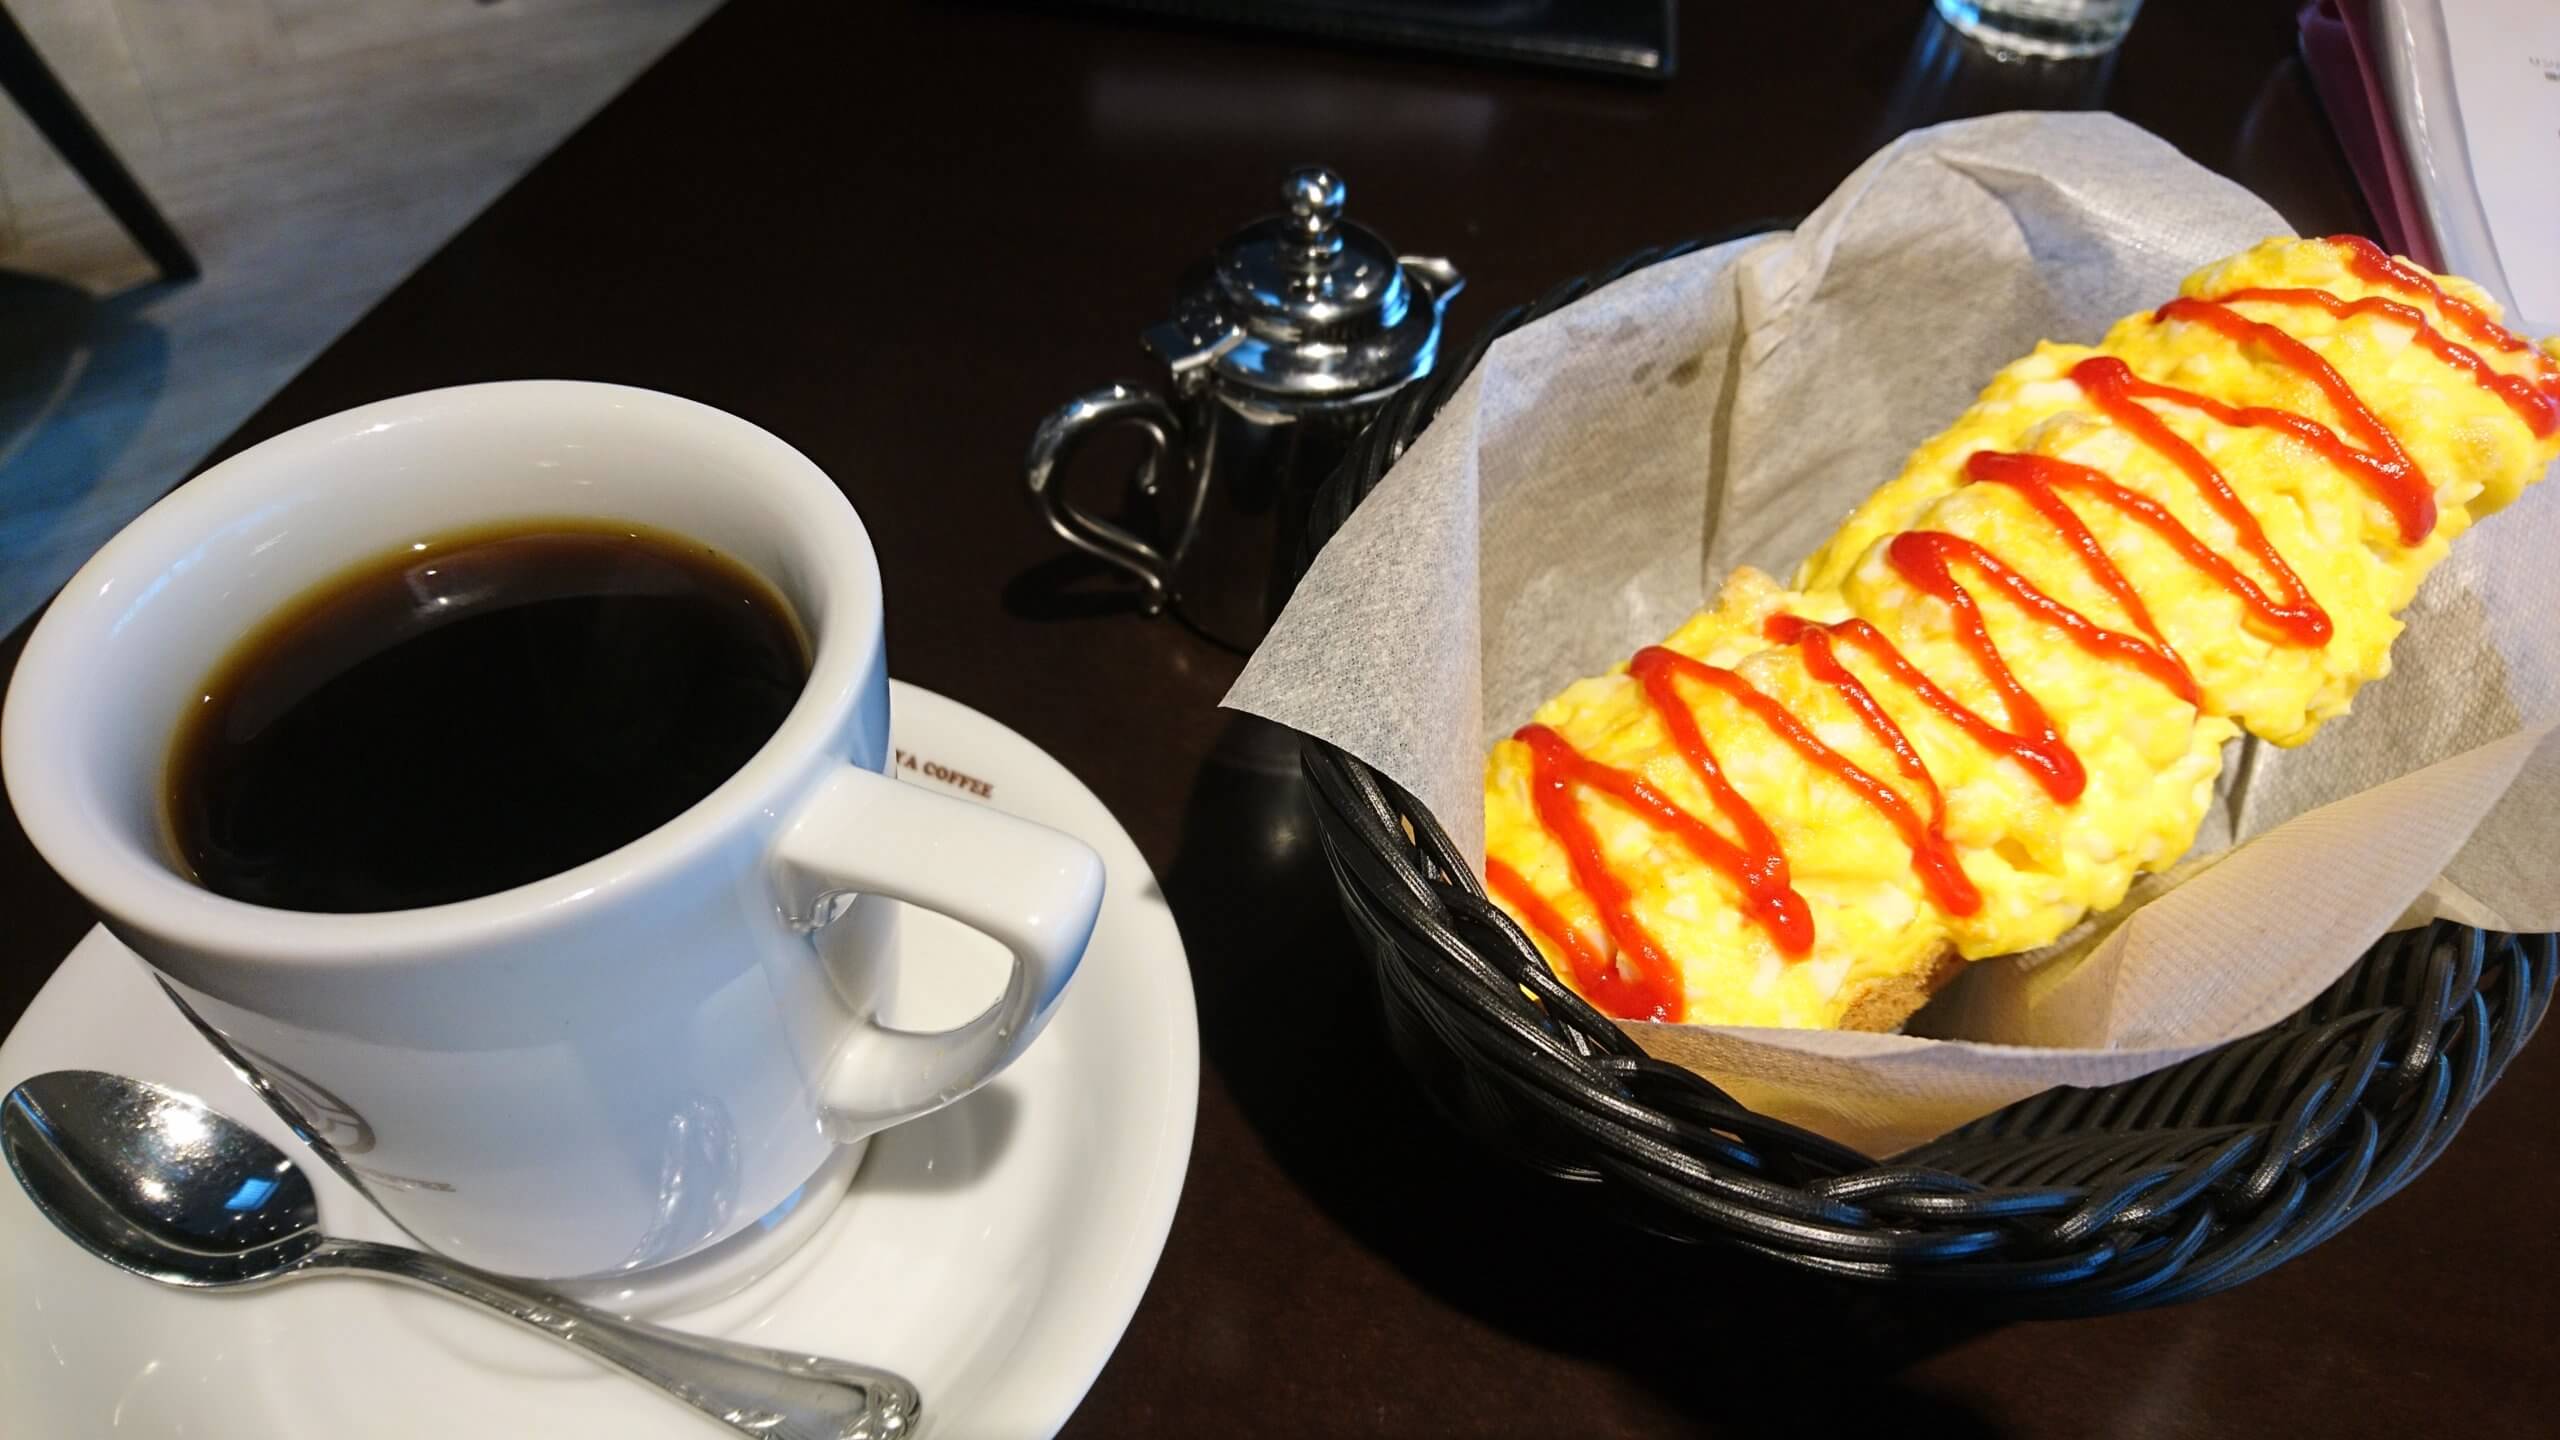 Morning service at a cafe in Saitama